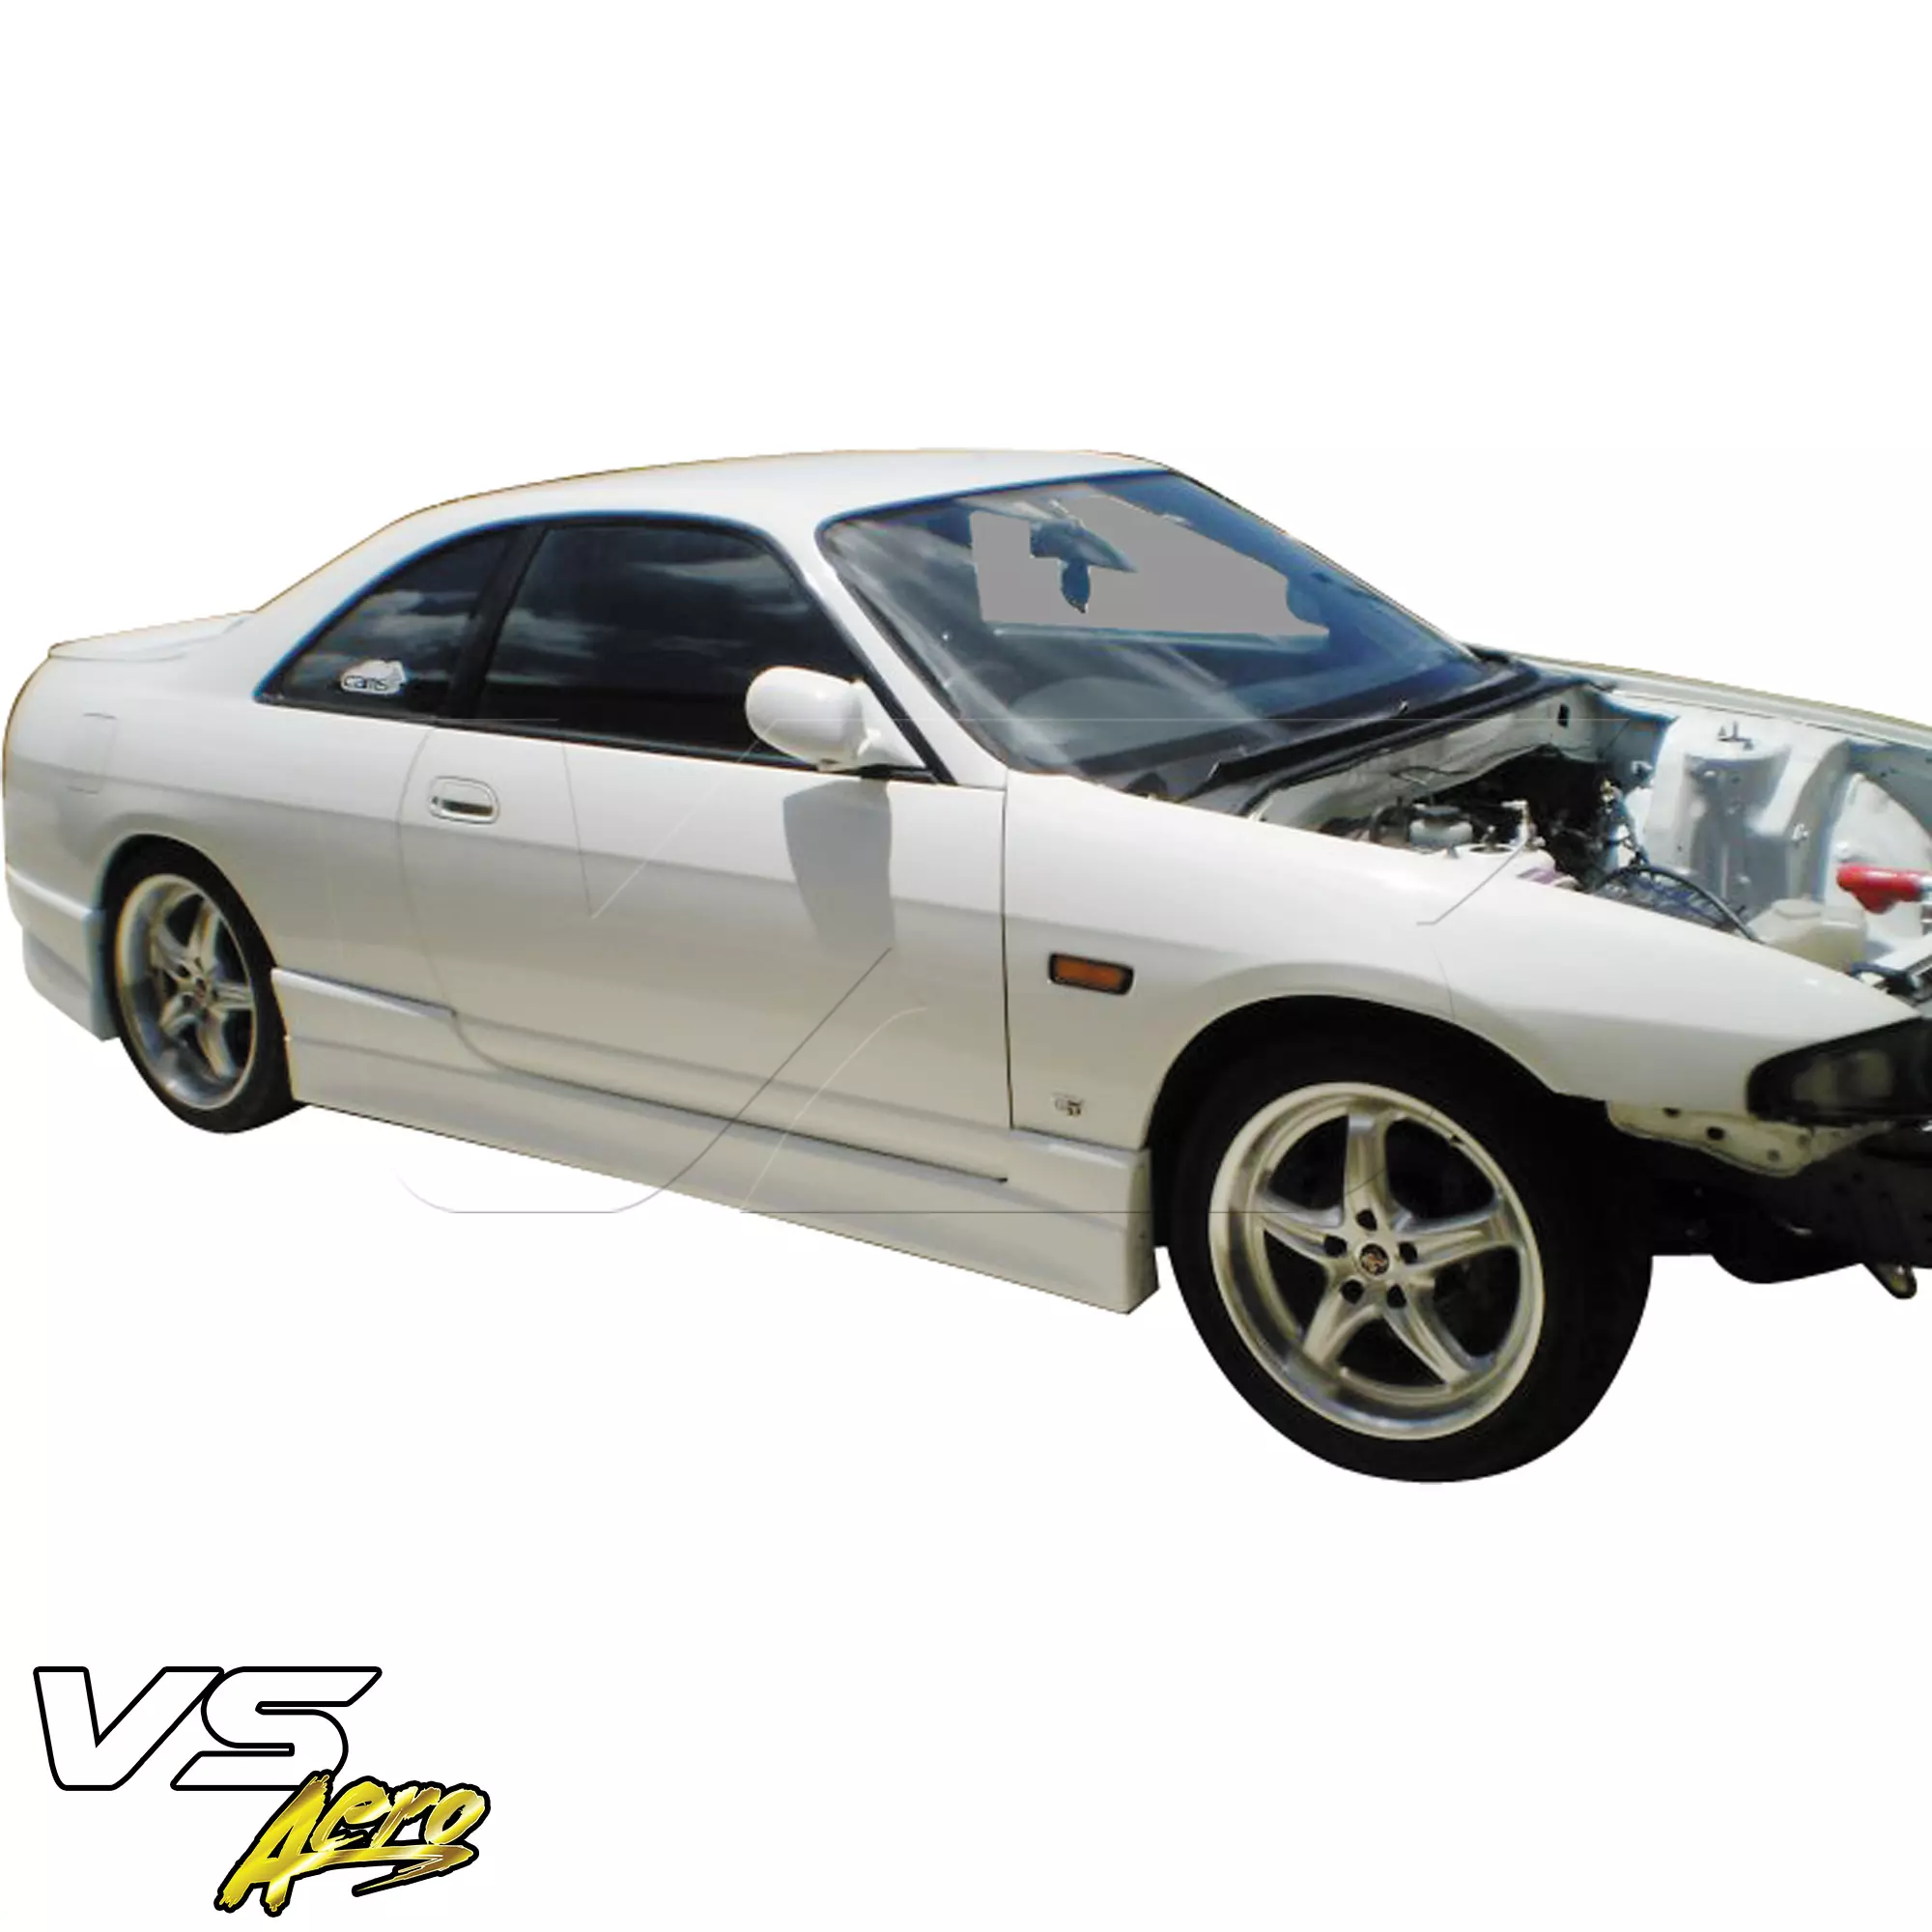 VSaero FRP MSPO v2 Body Kit 4pc > Nissan Skyline R33 GTS 1995-1998 > 2dr Coupe - Image 25